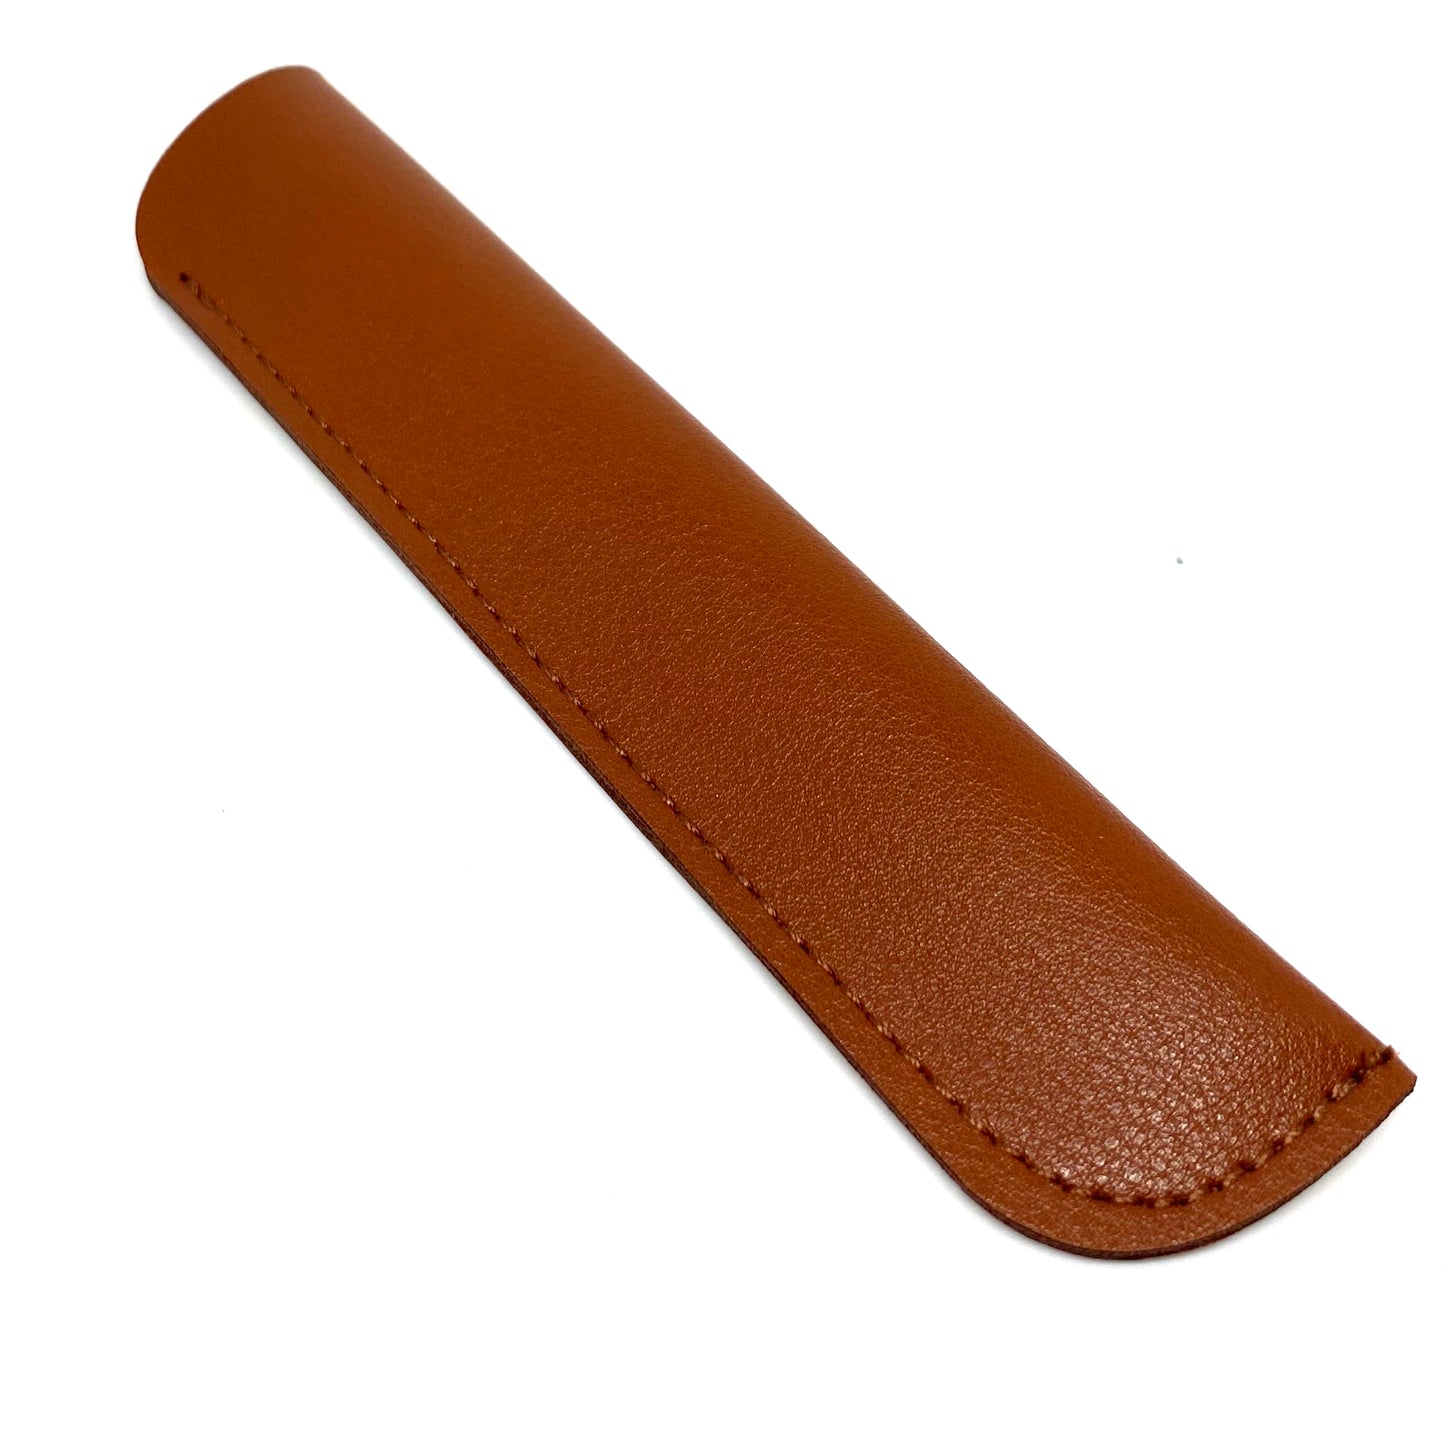 PU Leather pen sleeve